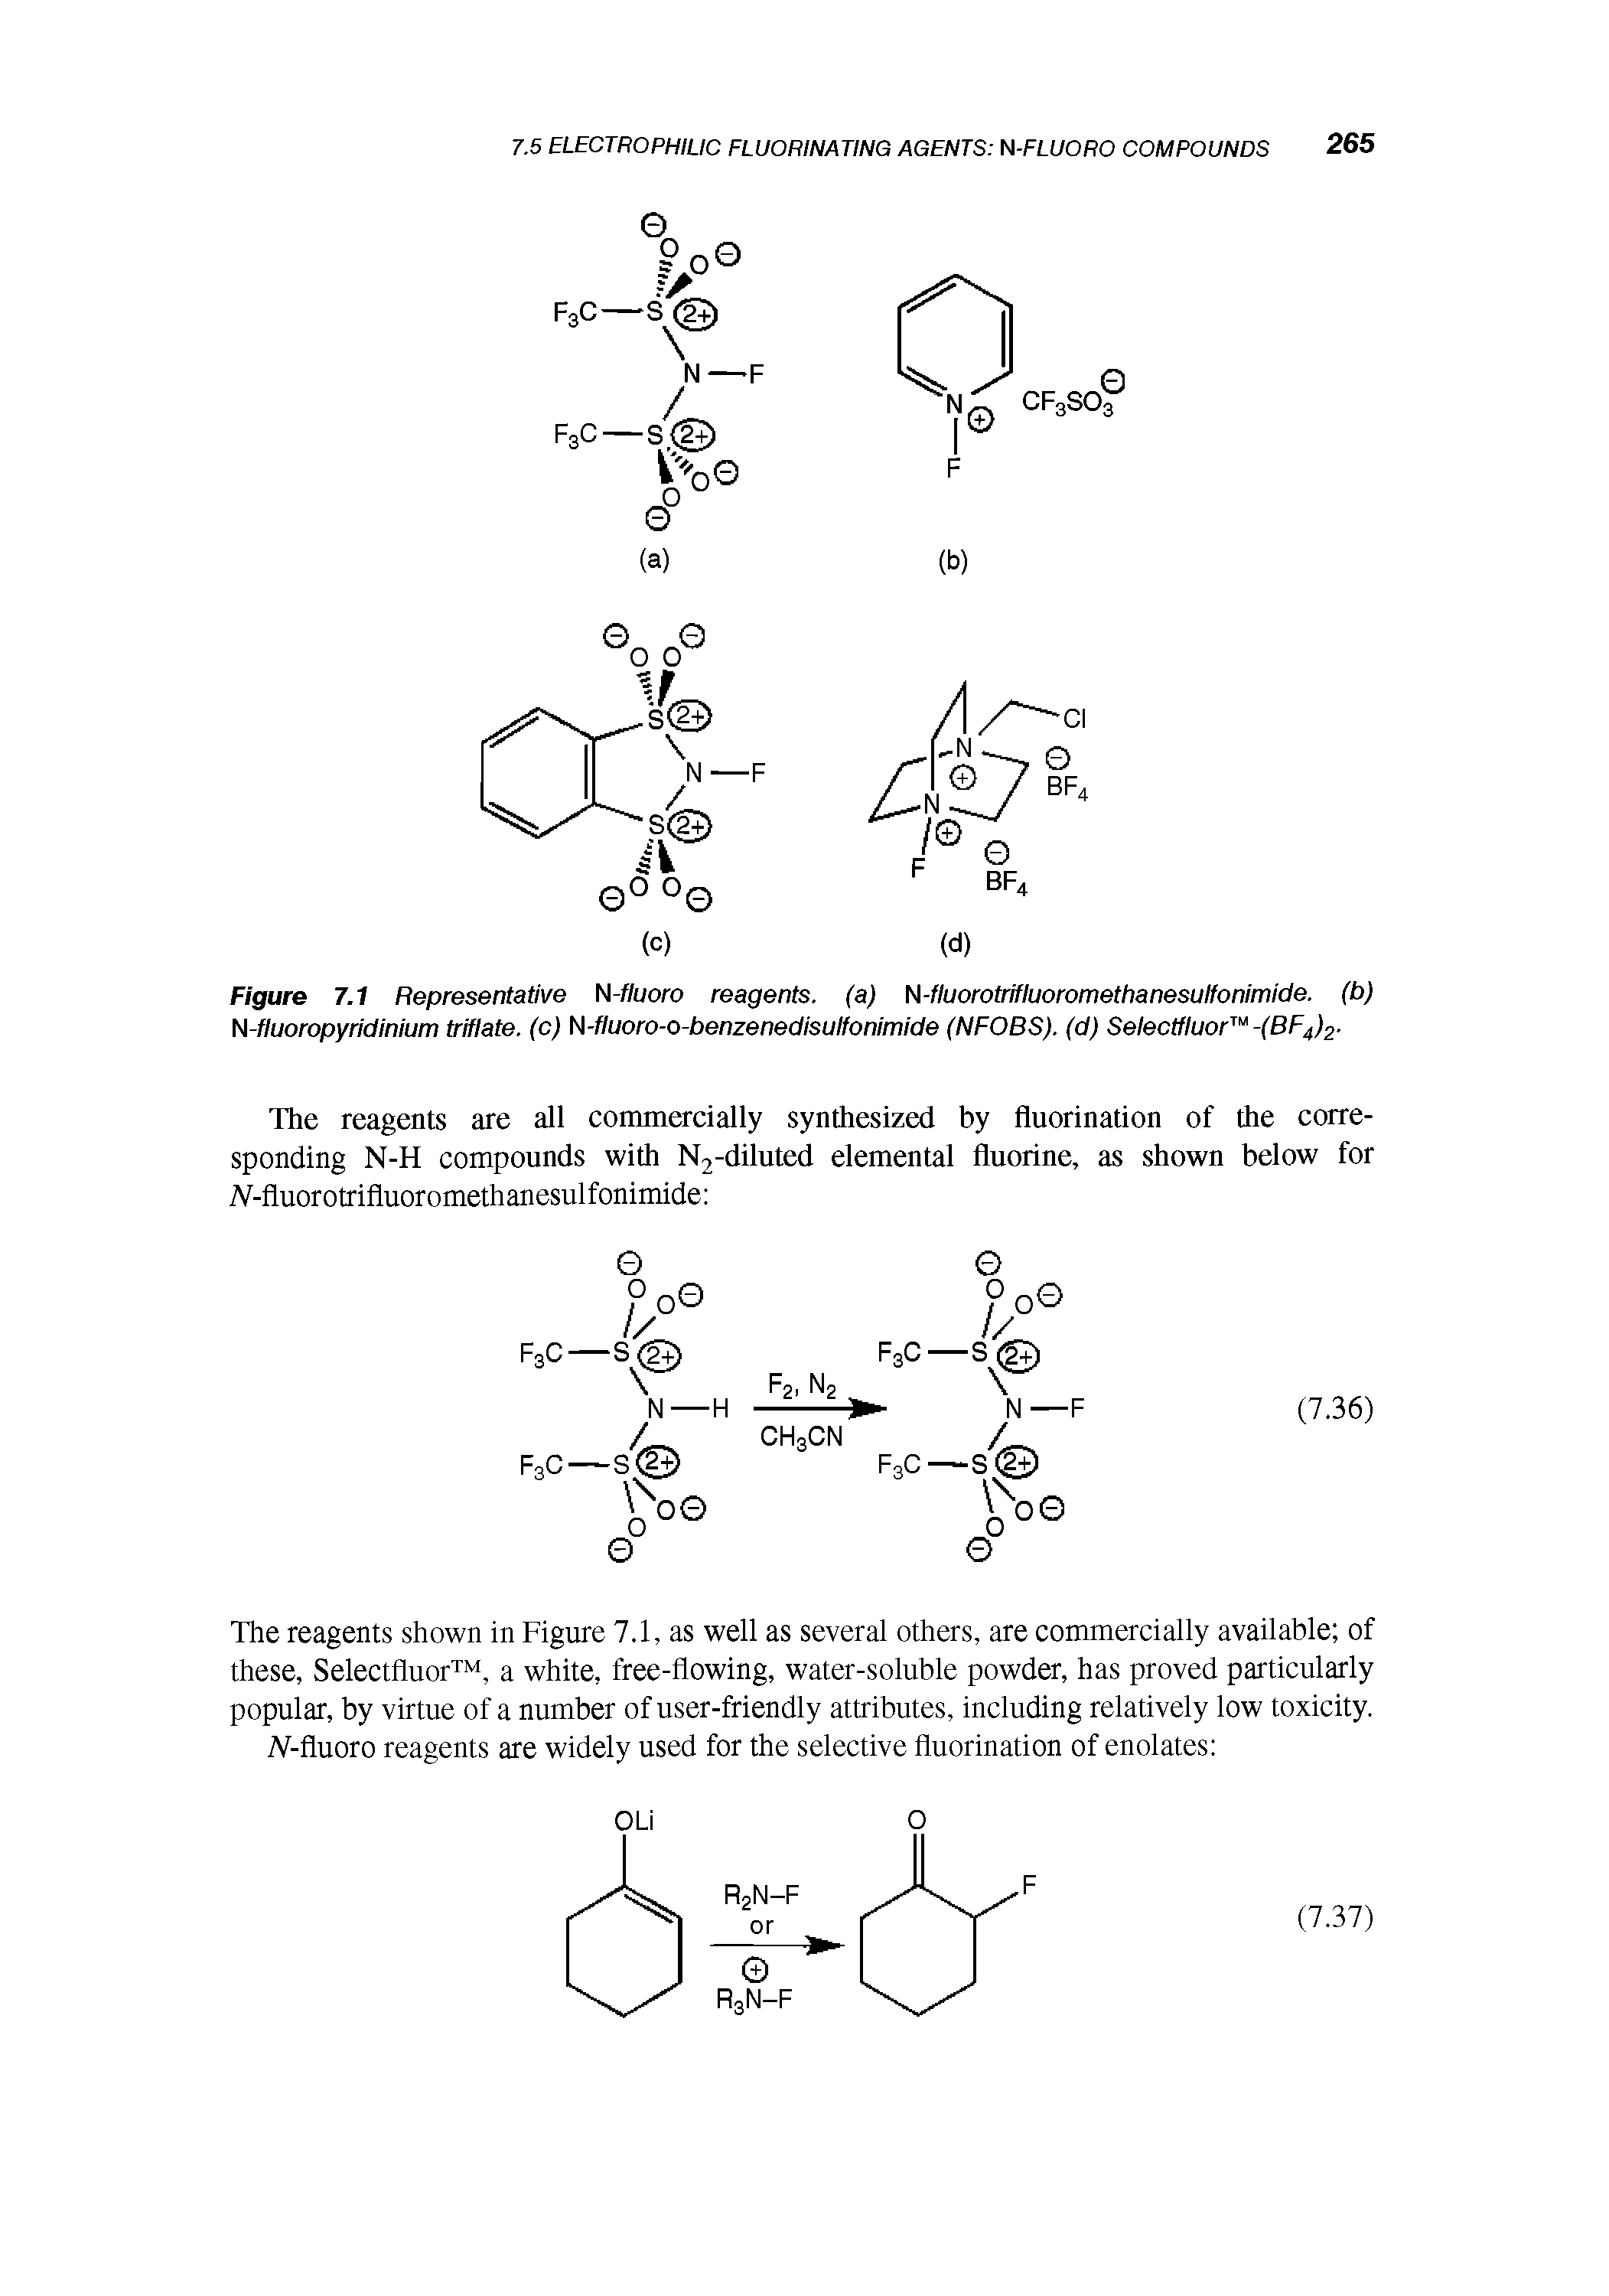 Figure 7 1 Representative N-fluoro reagents, (a) H-tIuorotrifluoromethanesulfonimide. (b) N-fluoropyridinium triflate. (c) N-fluoro-o-benzenedisulfonimide (NFOBS). (d) Selectfluor -(BF4)2.